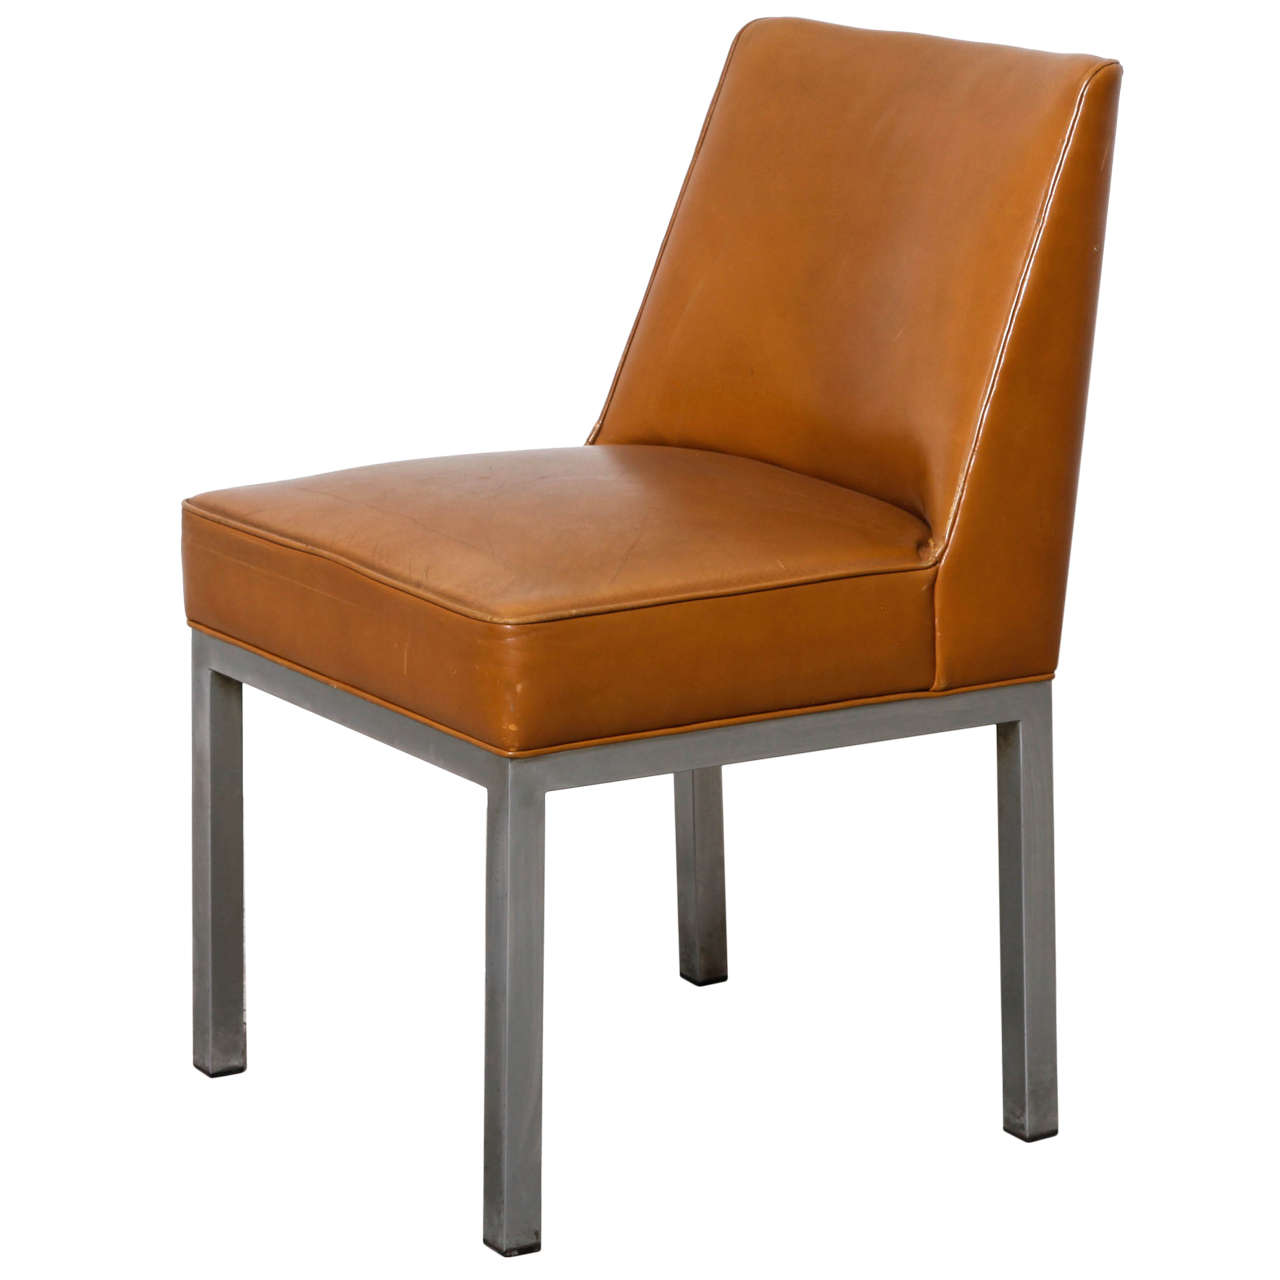 Jules Wabbes Universal Model 46 Chair